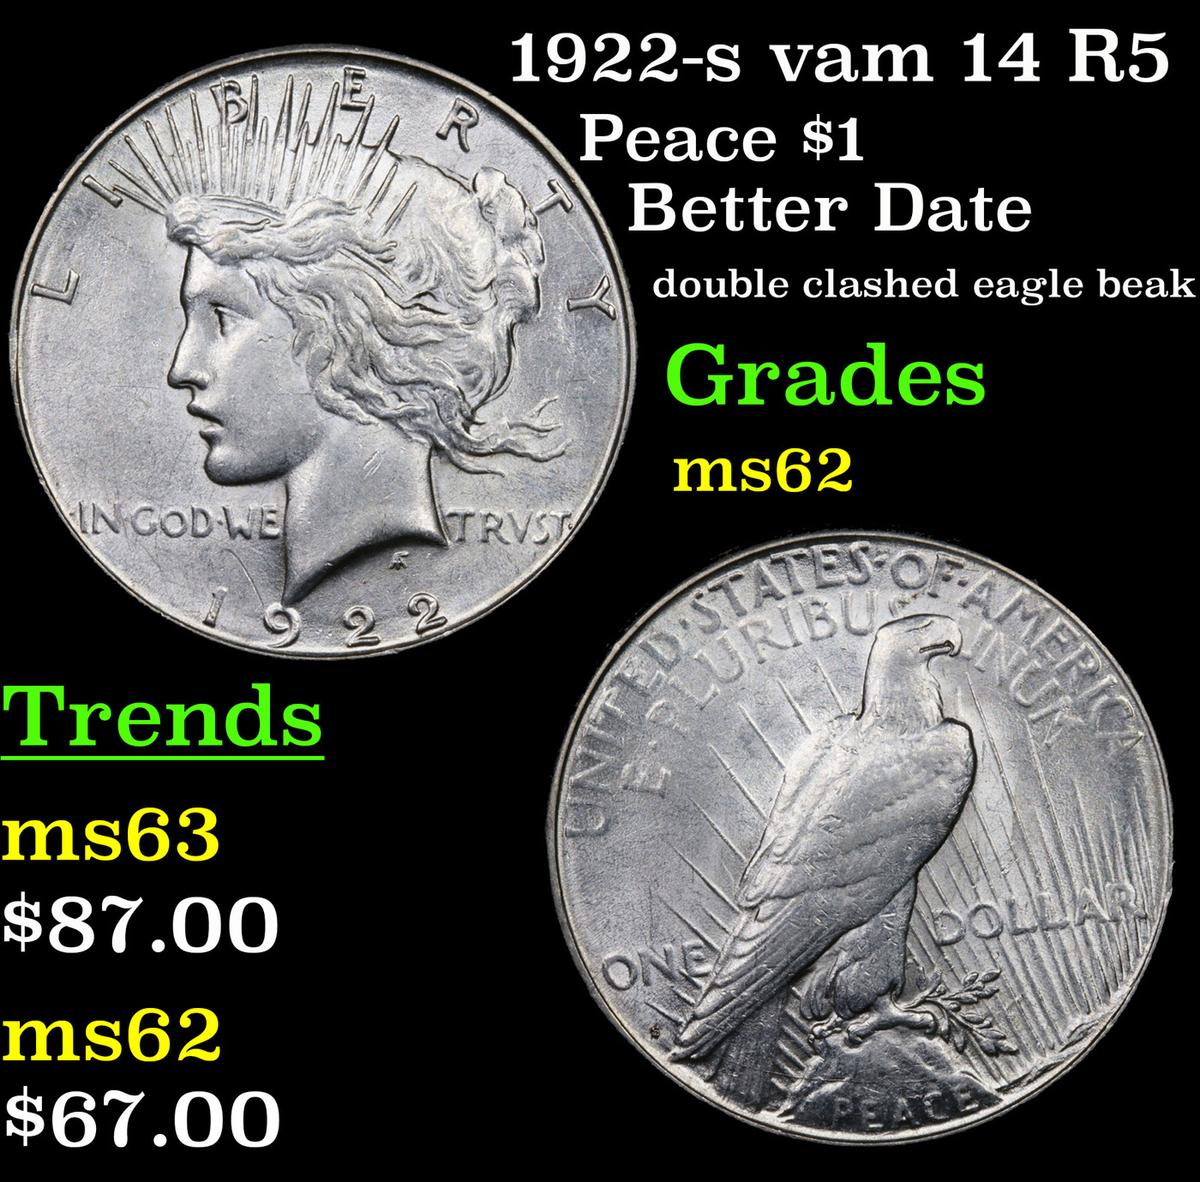 1922-s vam 14 R5 Peace Dollar $1 Grades Select Unc